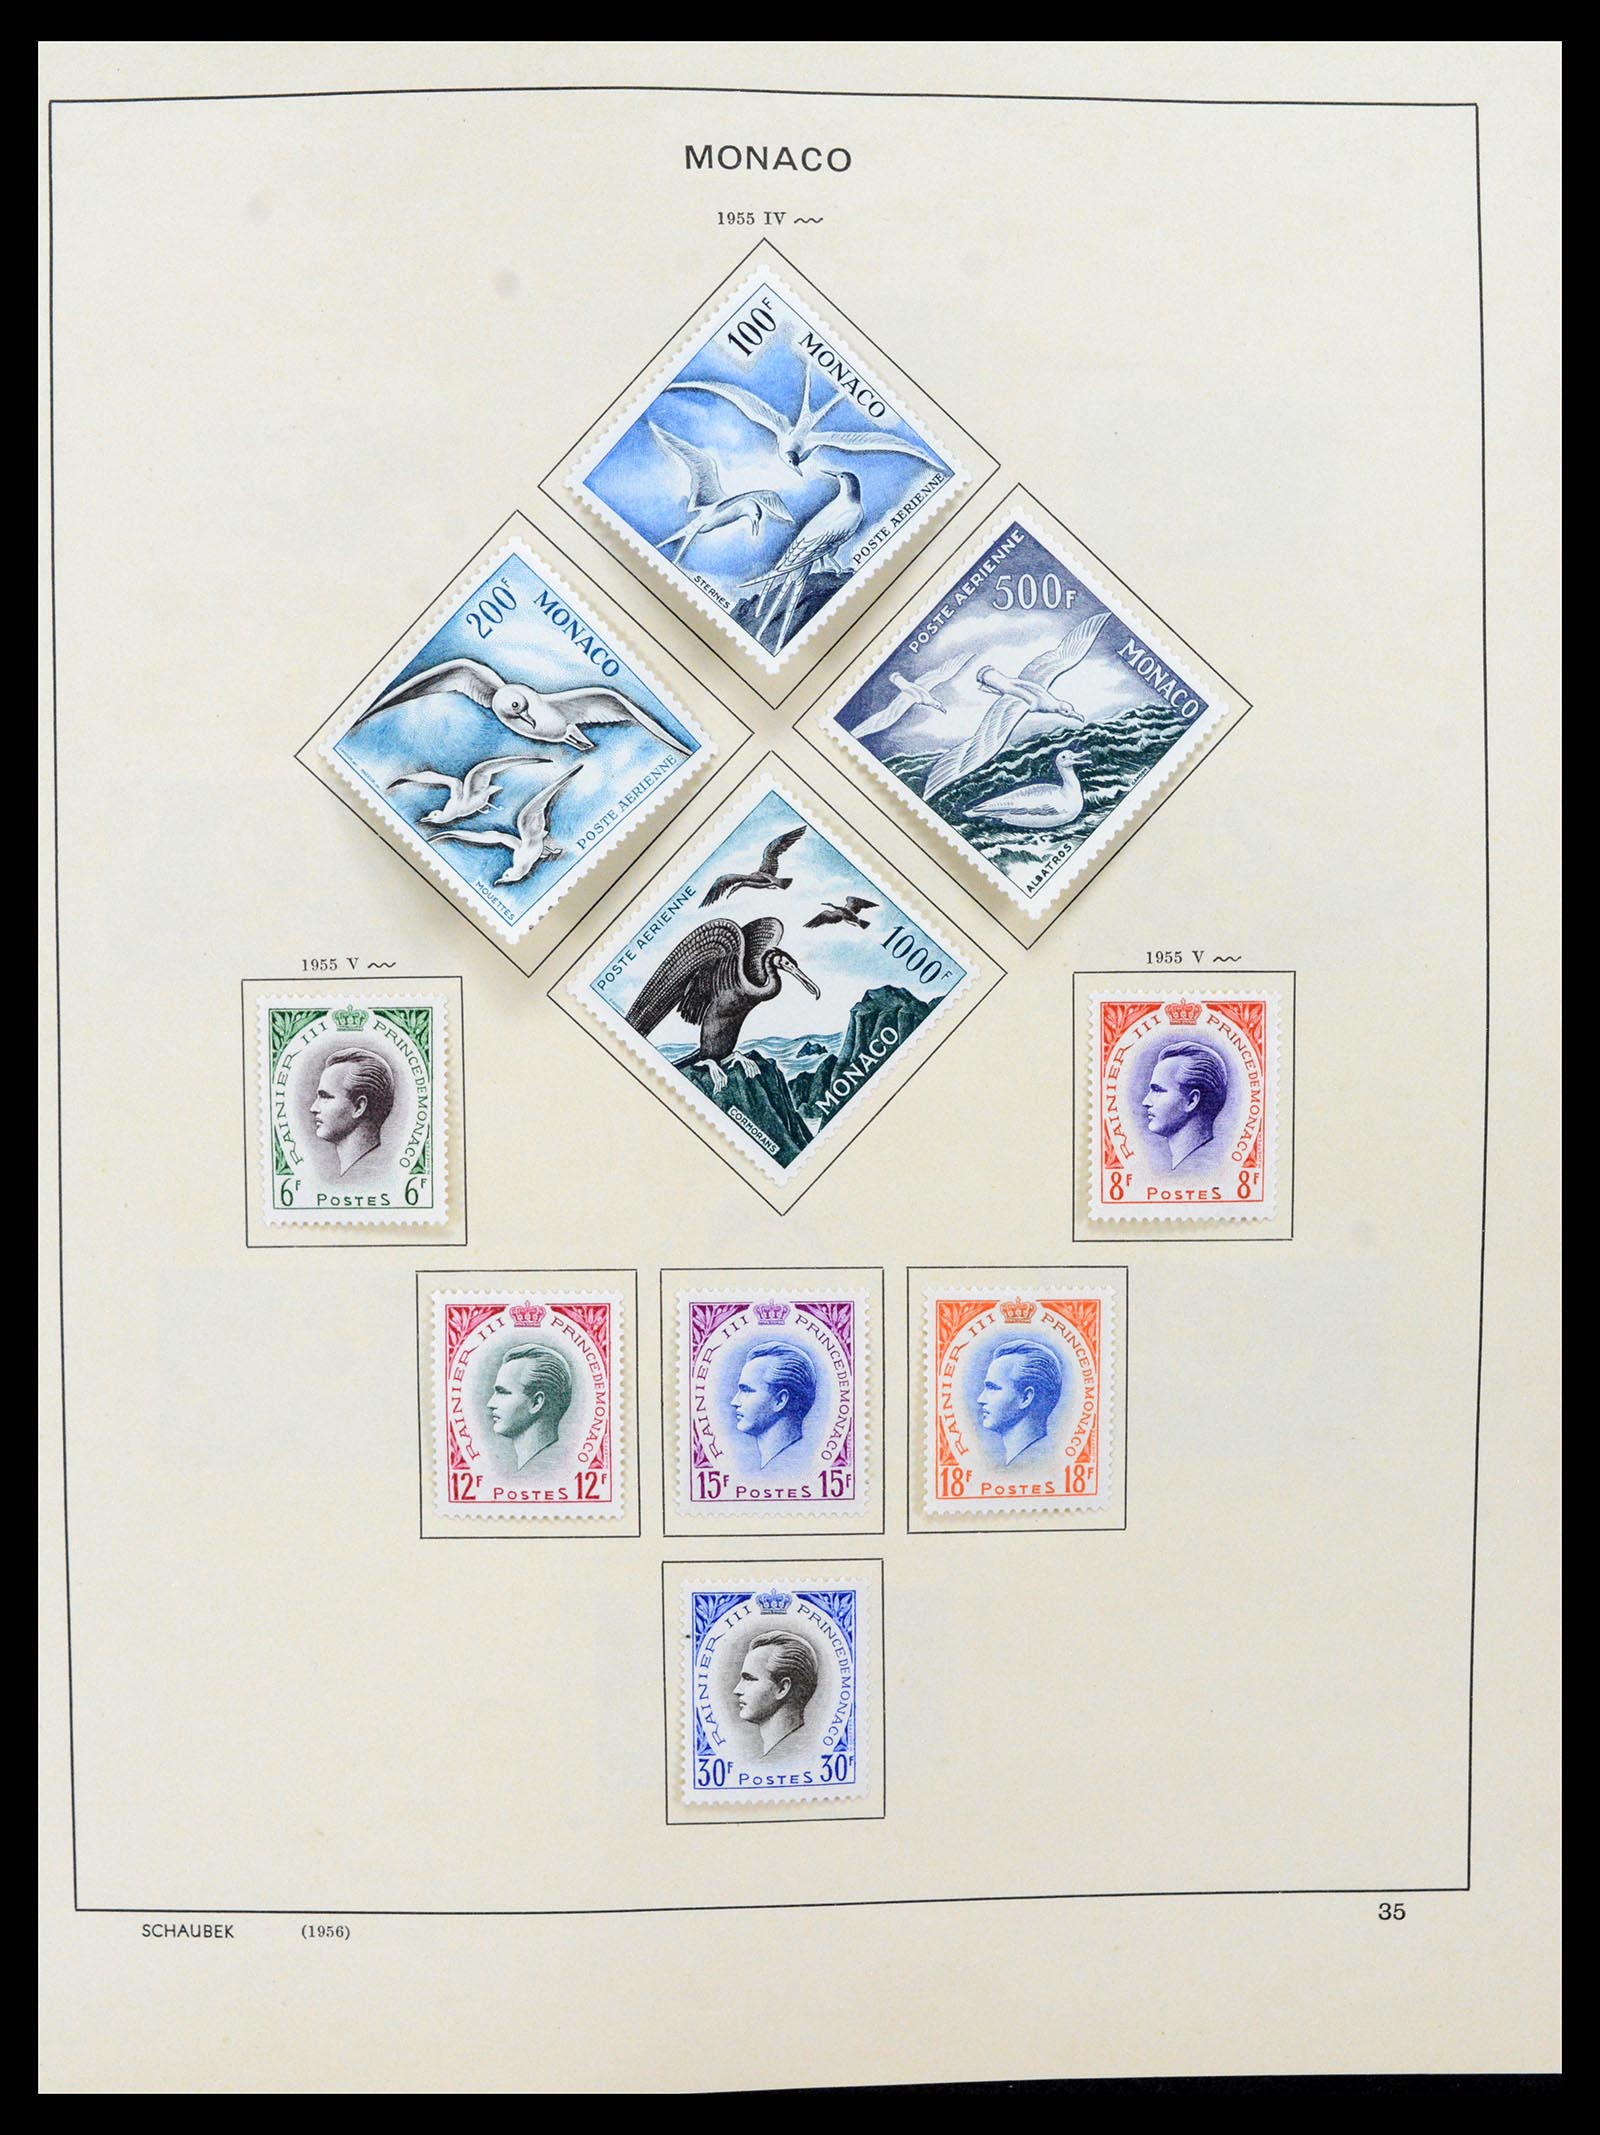 37570 040 - Stamp collection 37570 Monaco 1885-2013.